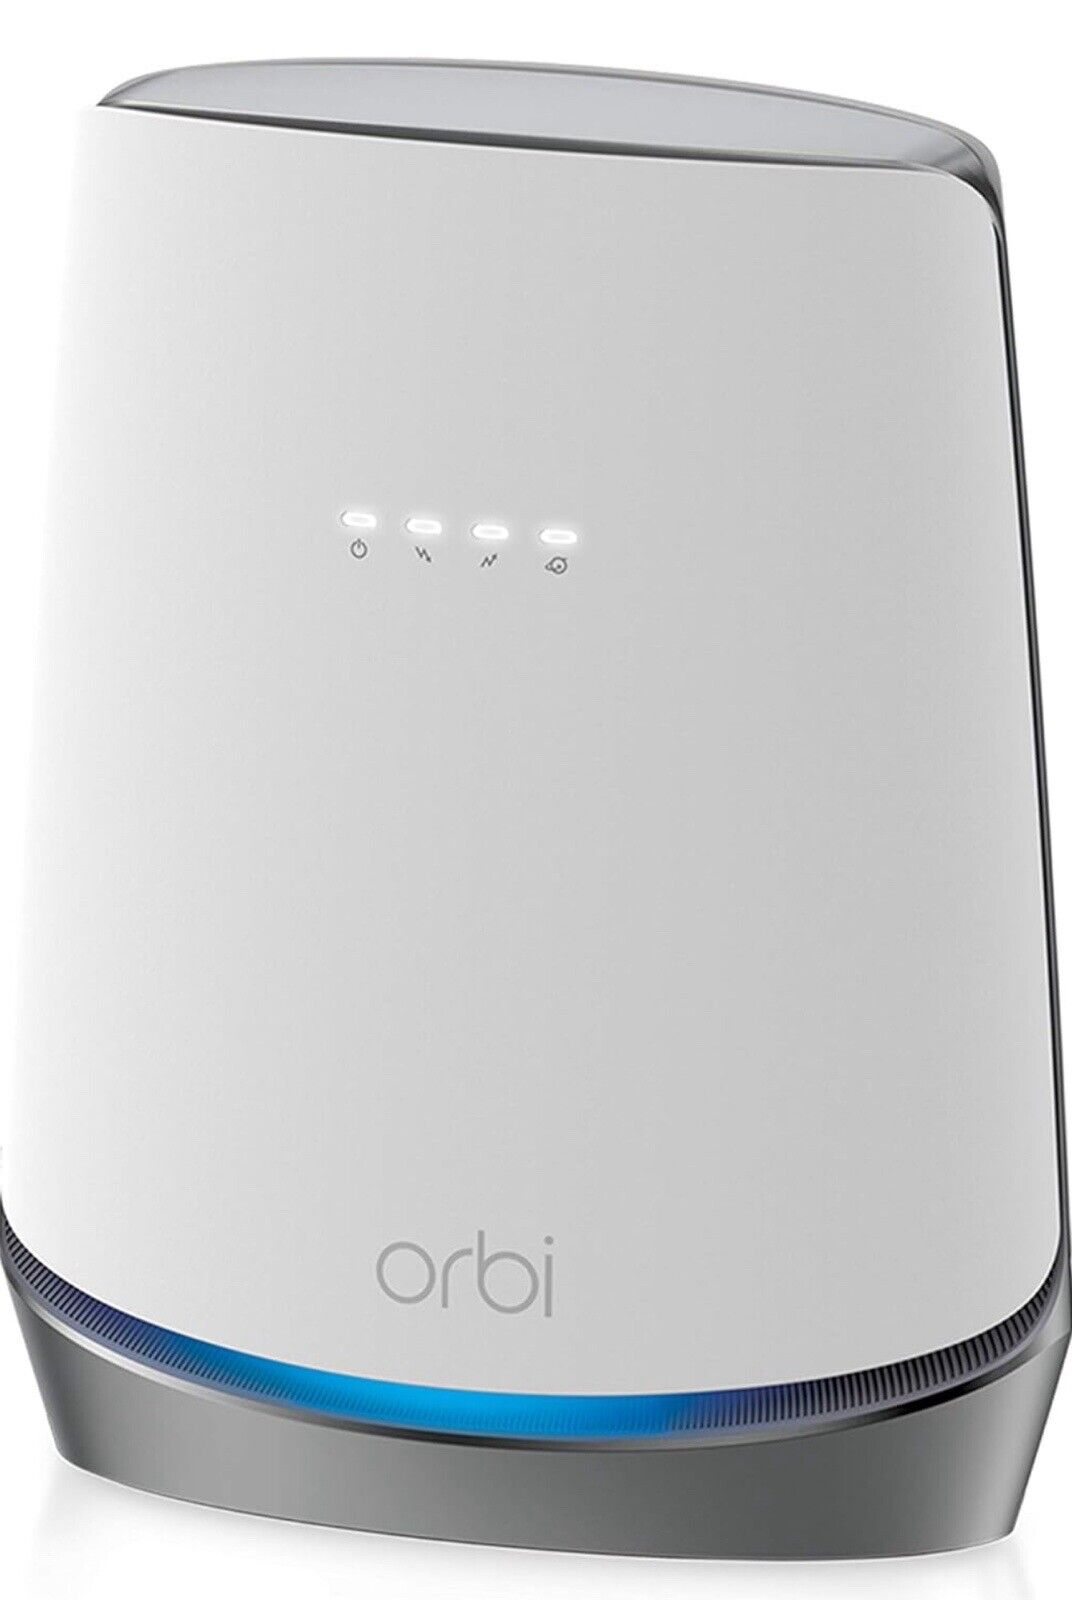 NEW NETGEAR CBR750-100NAS Orbi WiFi 6 DOCSIS 3.1 Cable Modem Router Wireless.